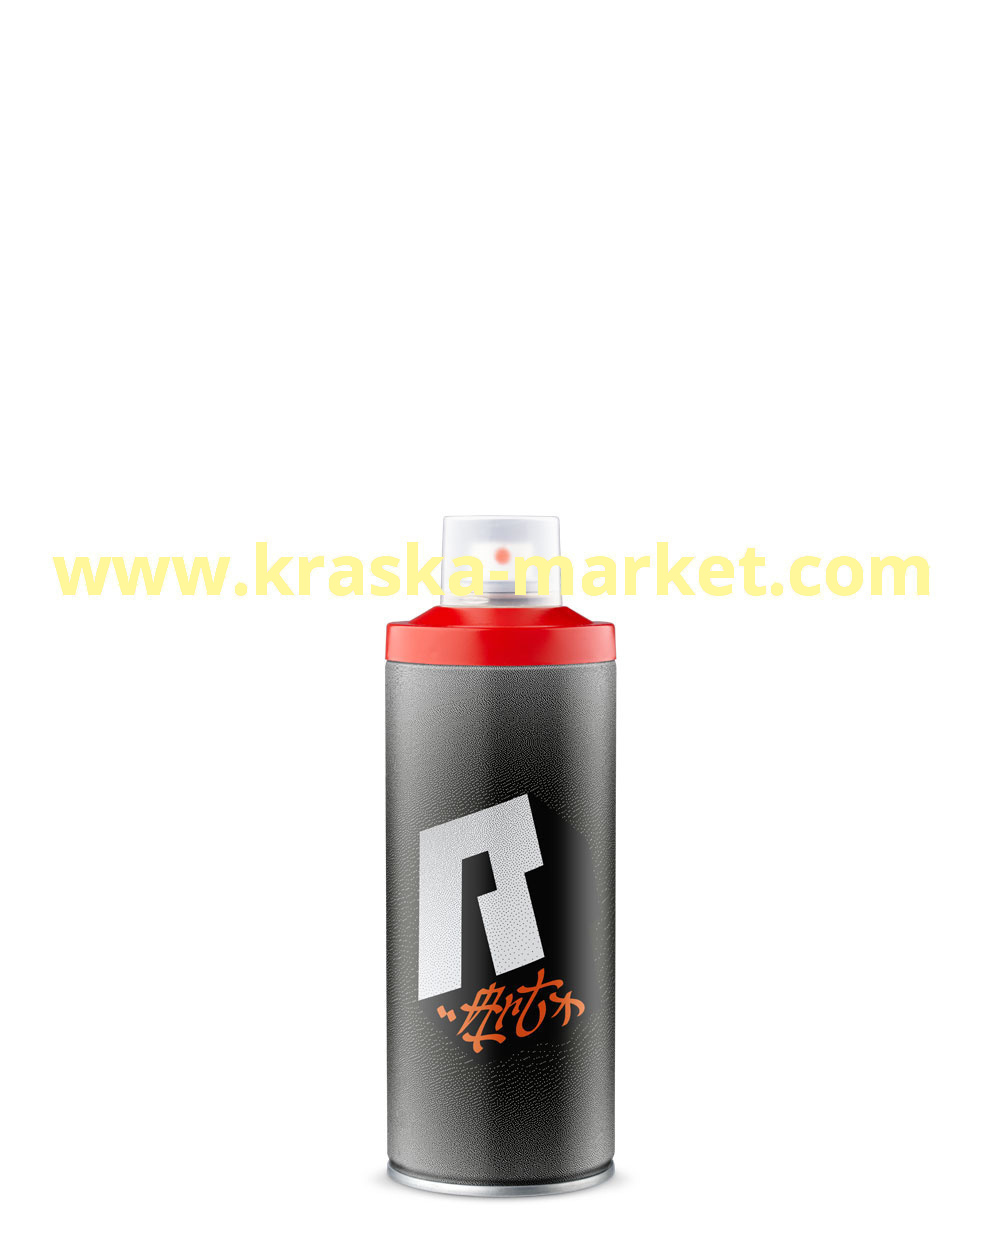 Краска RUSH ART. Цвет: № 2012 крем - сода. Объем(м3): 520 мл. Торговая марка: RUSH.